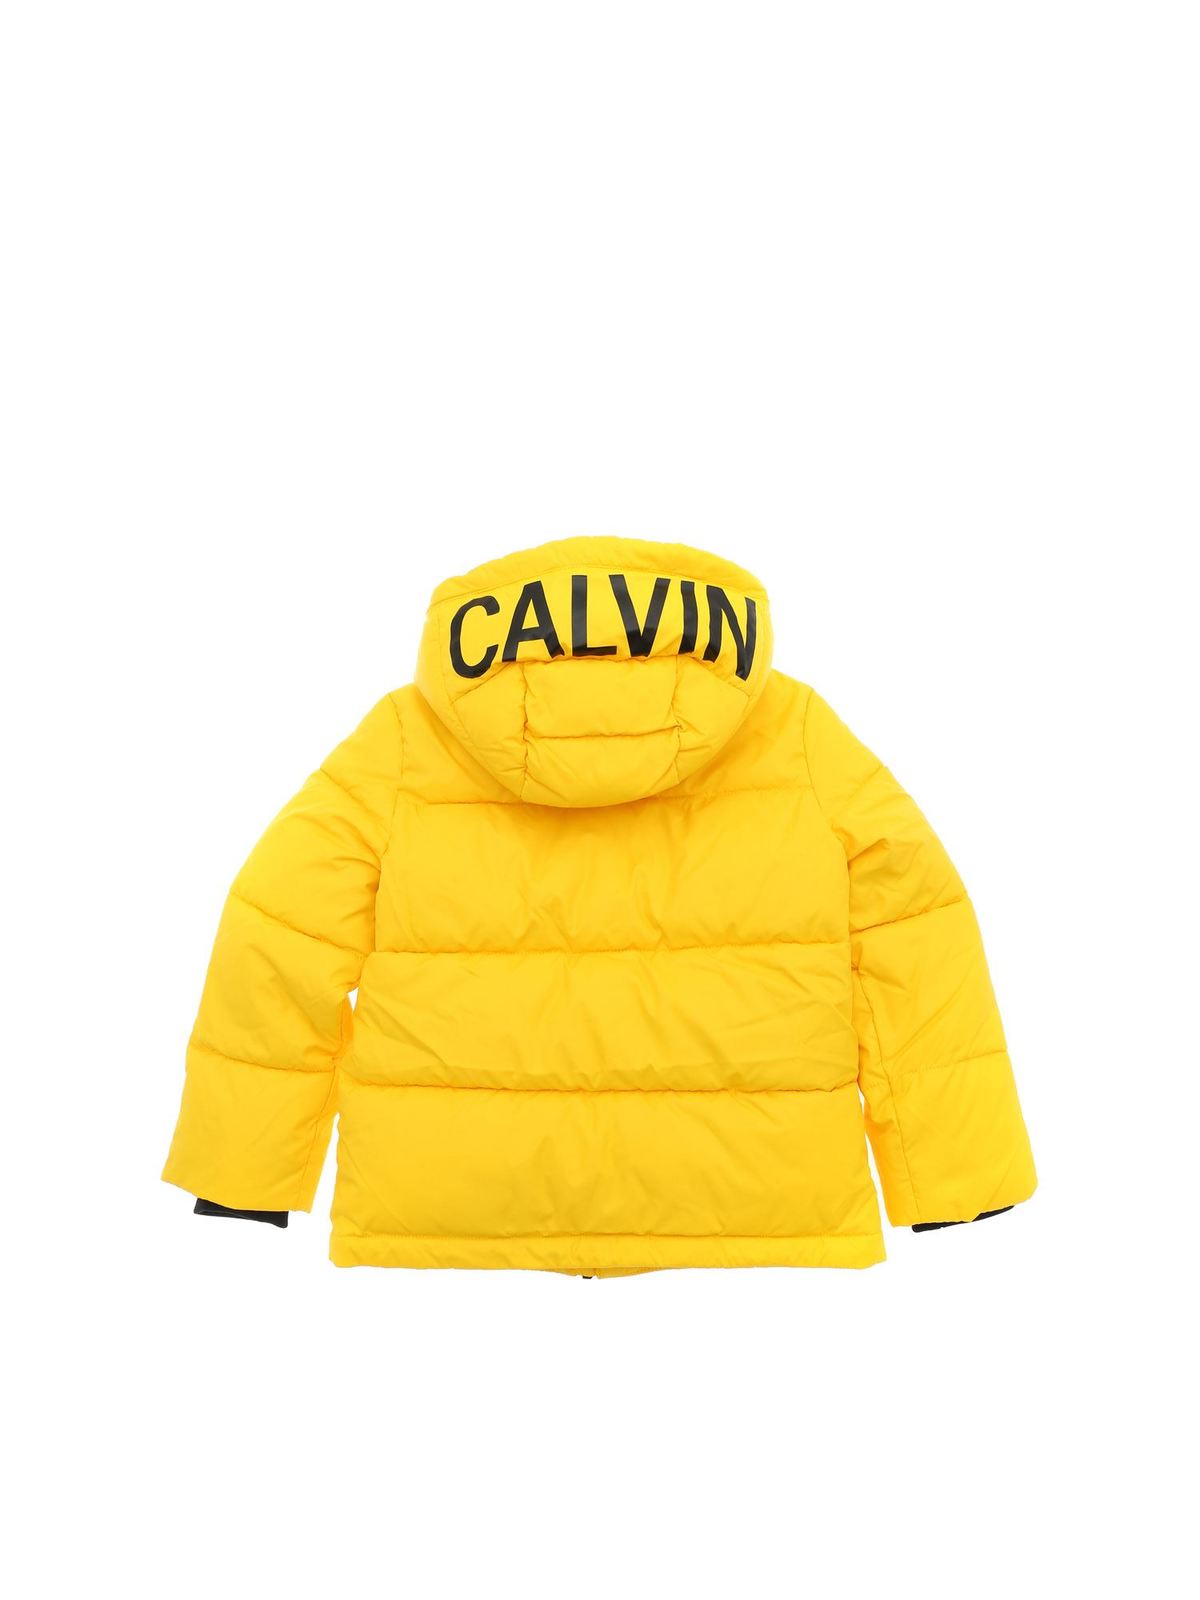 Calvin Klein Jeans - Yellow down jacket 